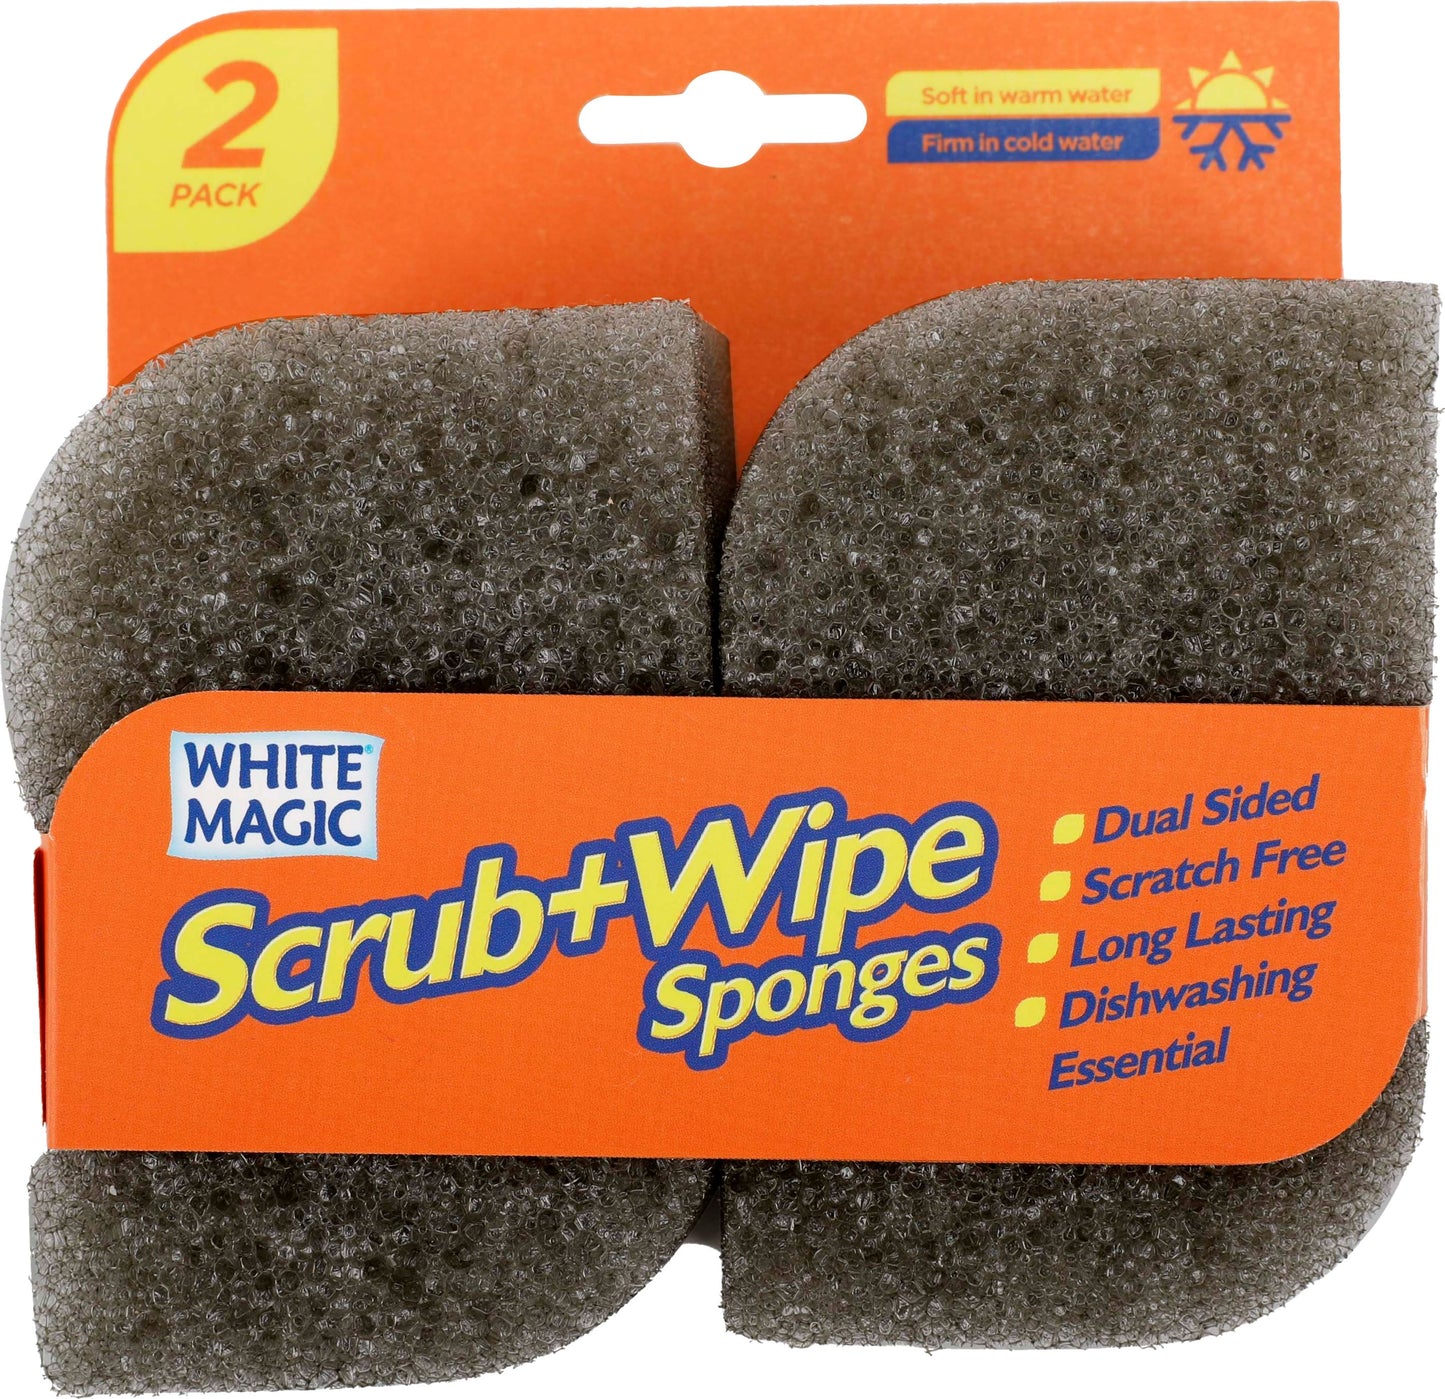 White Magic Scrub+Wipe Sponges